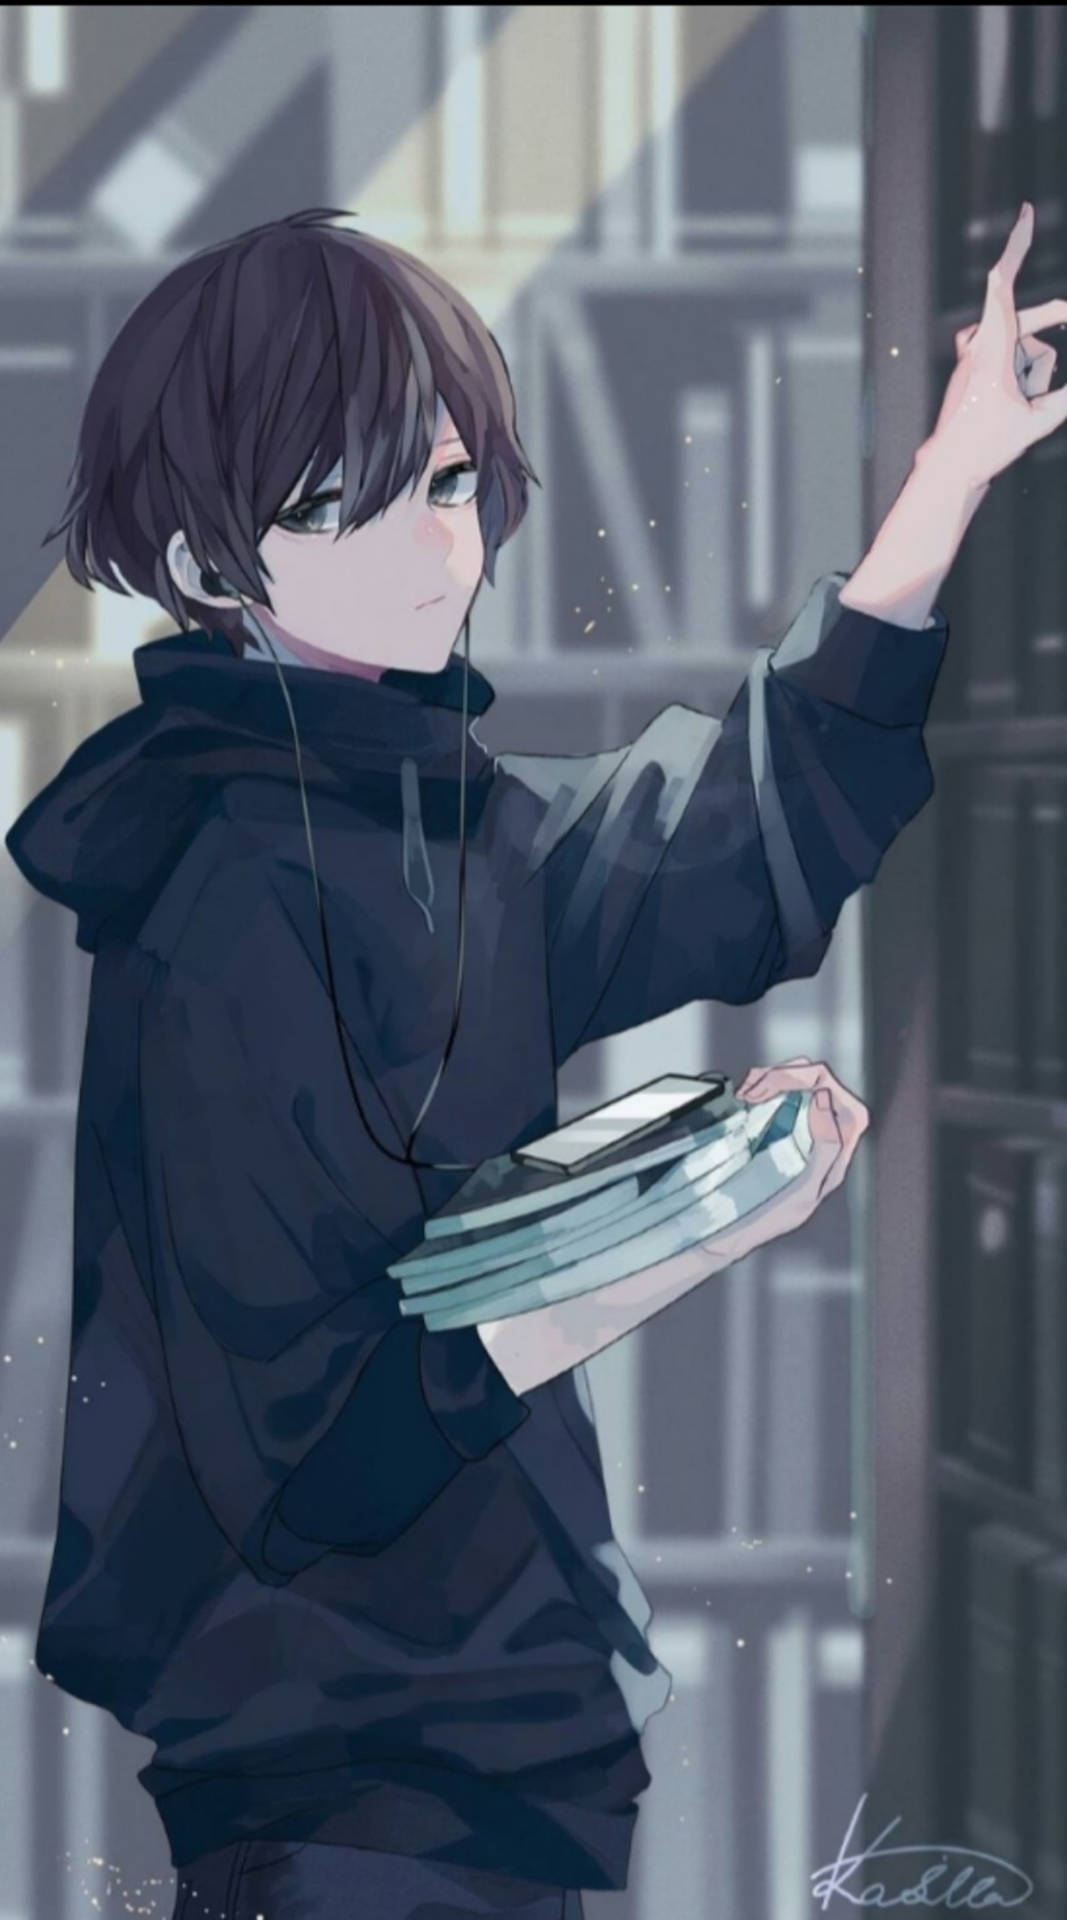 Sad Anime Carrying Books Aesthetic Background